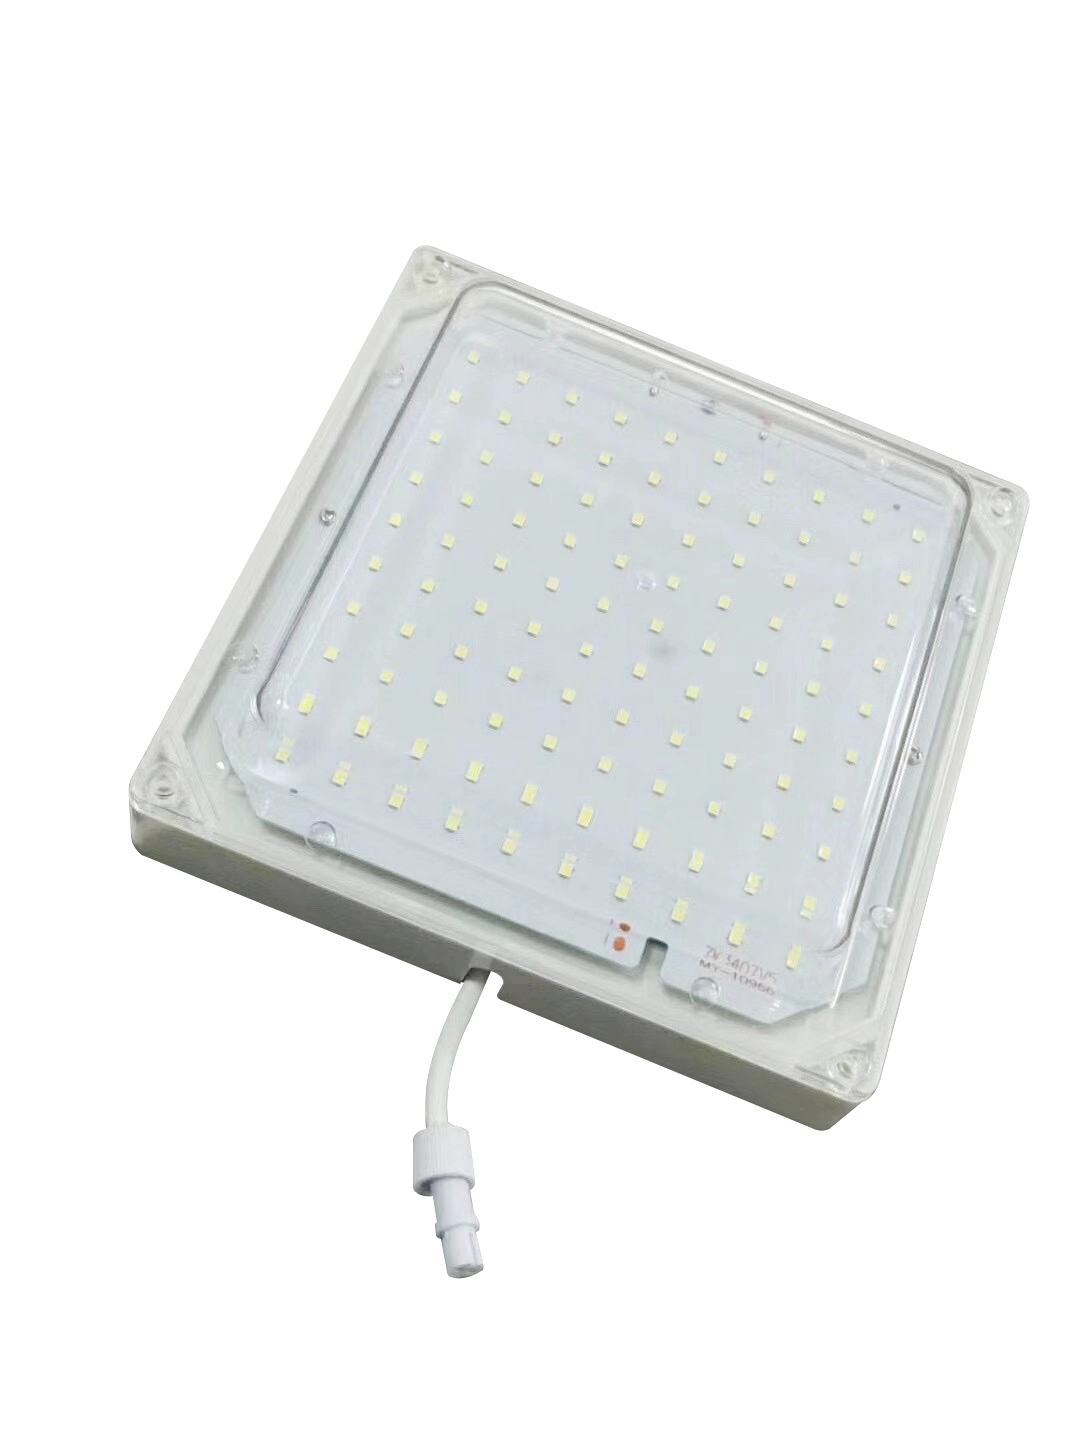 Square waterproof led light